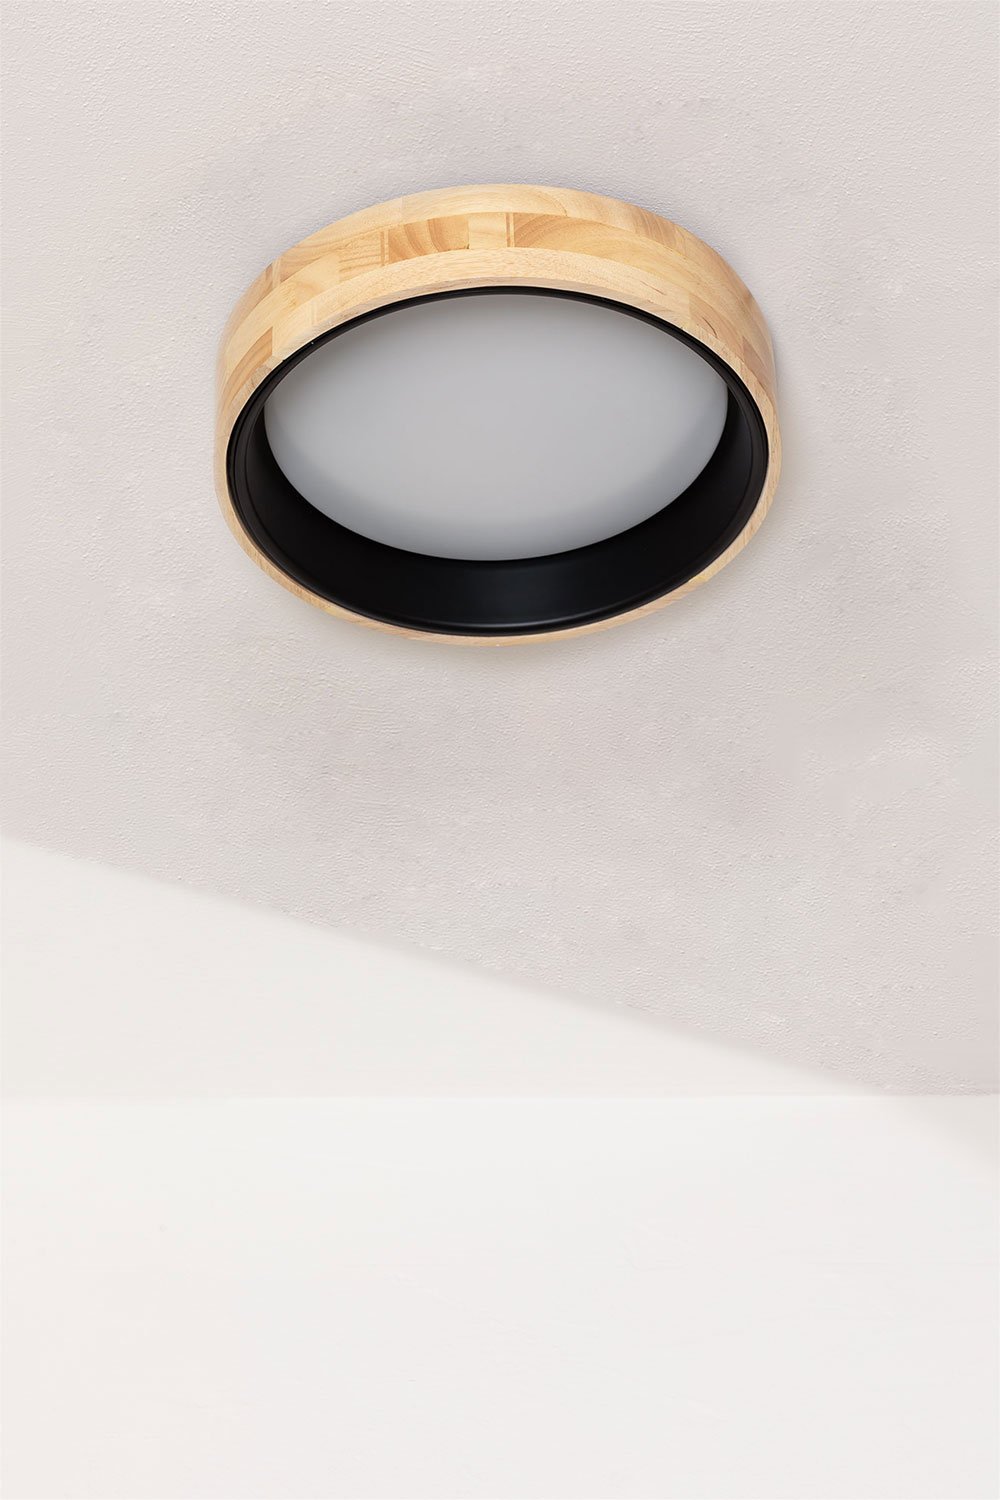 LED plafondlamp in hout en staal Balto, galerij beeld 1